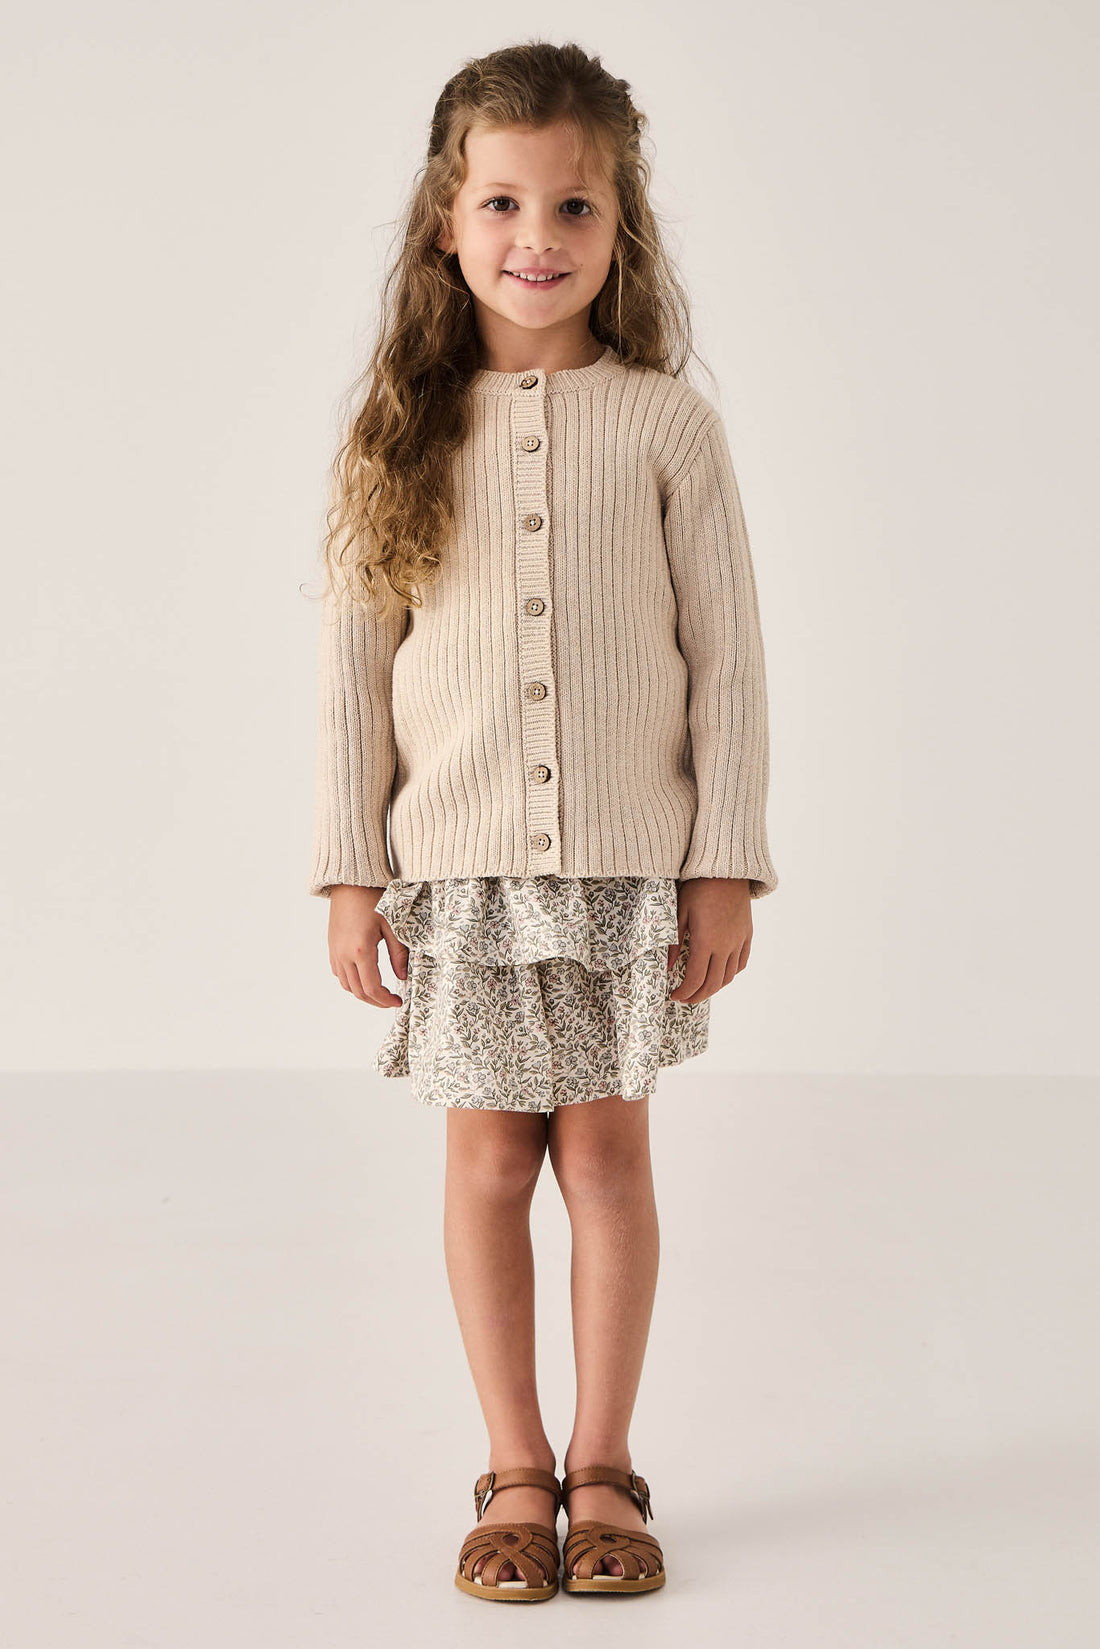 Organic Cotton Ruby Skirt - Ariella Eggnog Childrens Skirt from Jamie Kay NZ